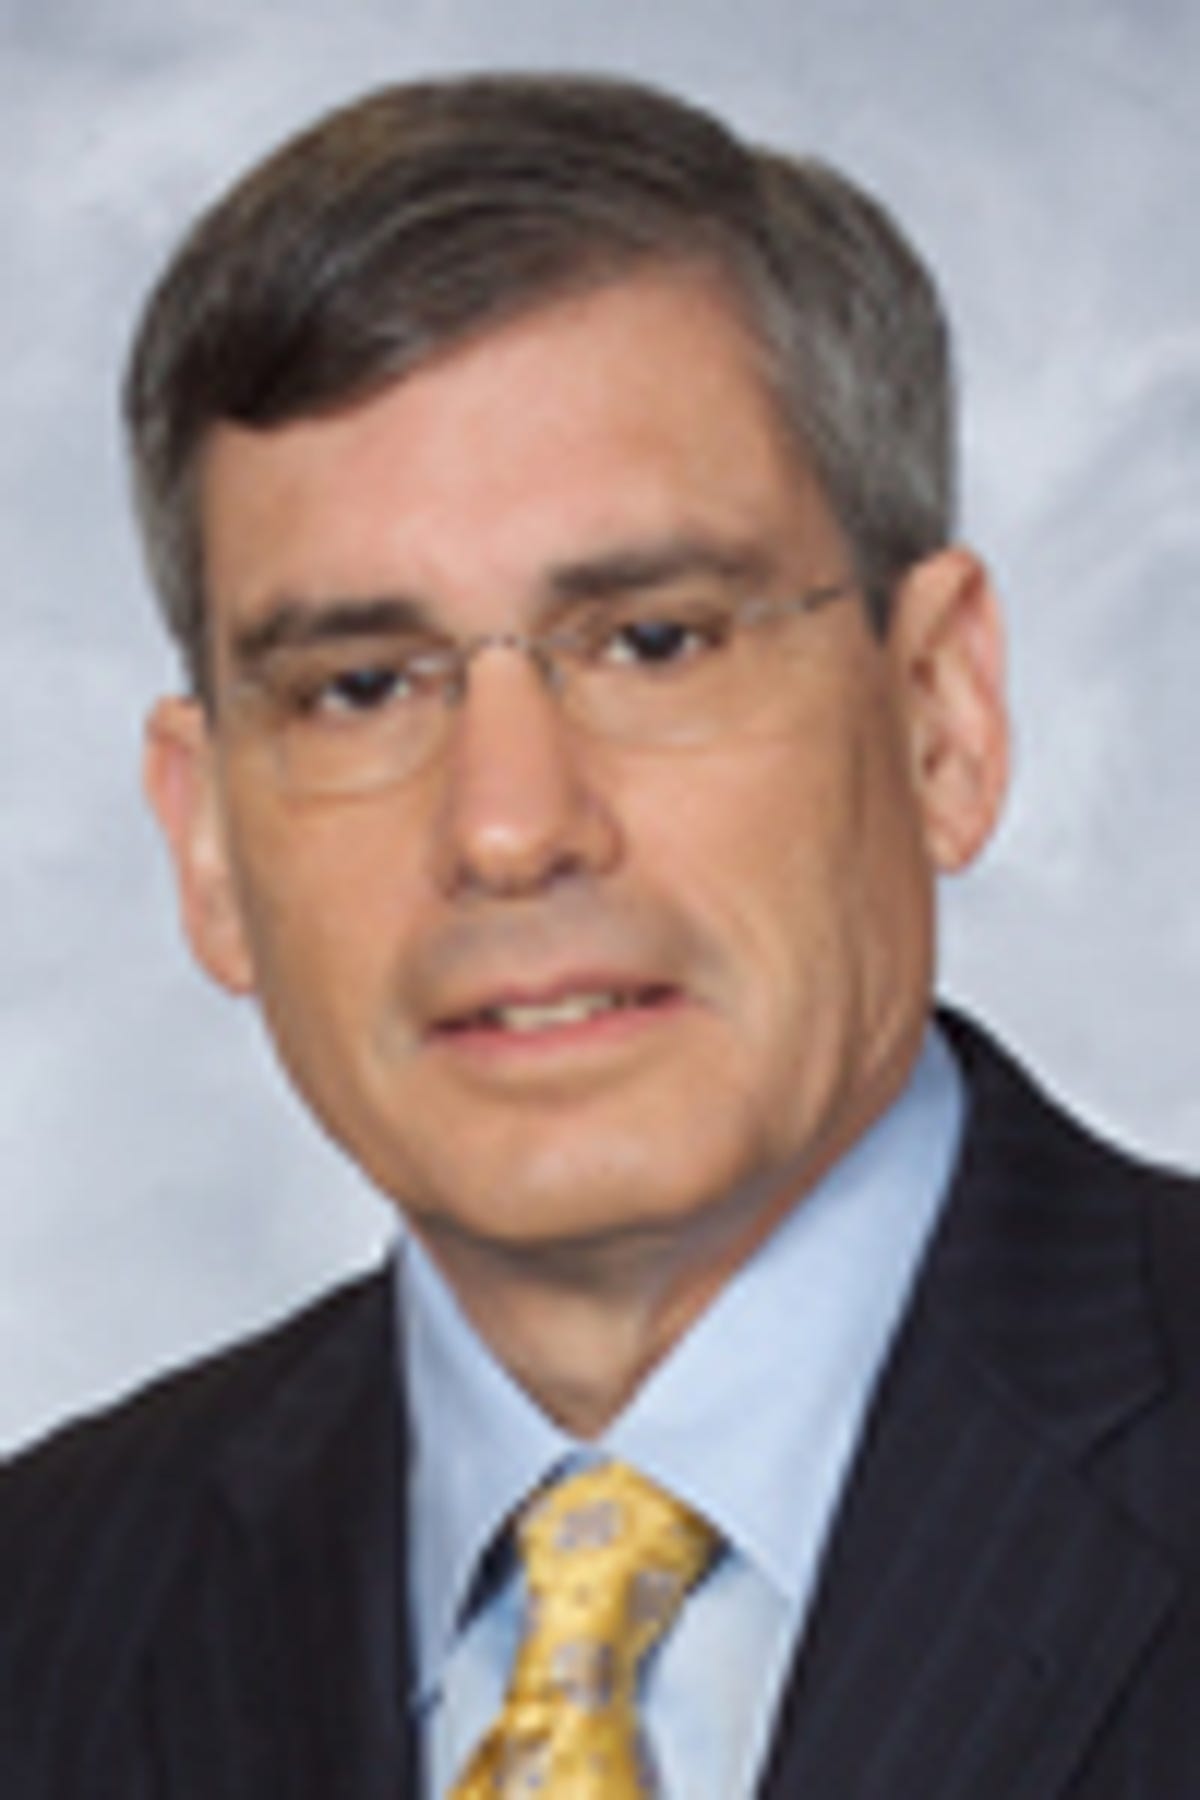 Antitrust attorney Gary Reback